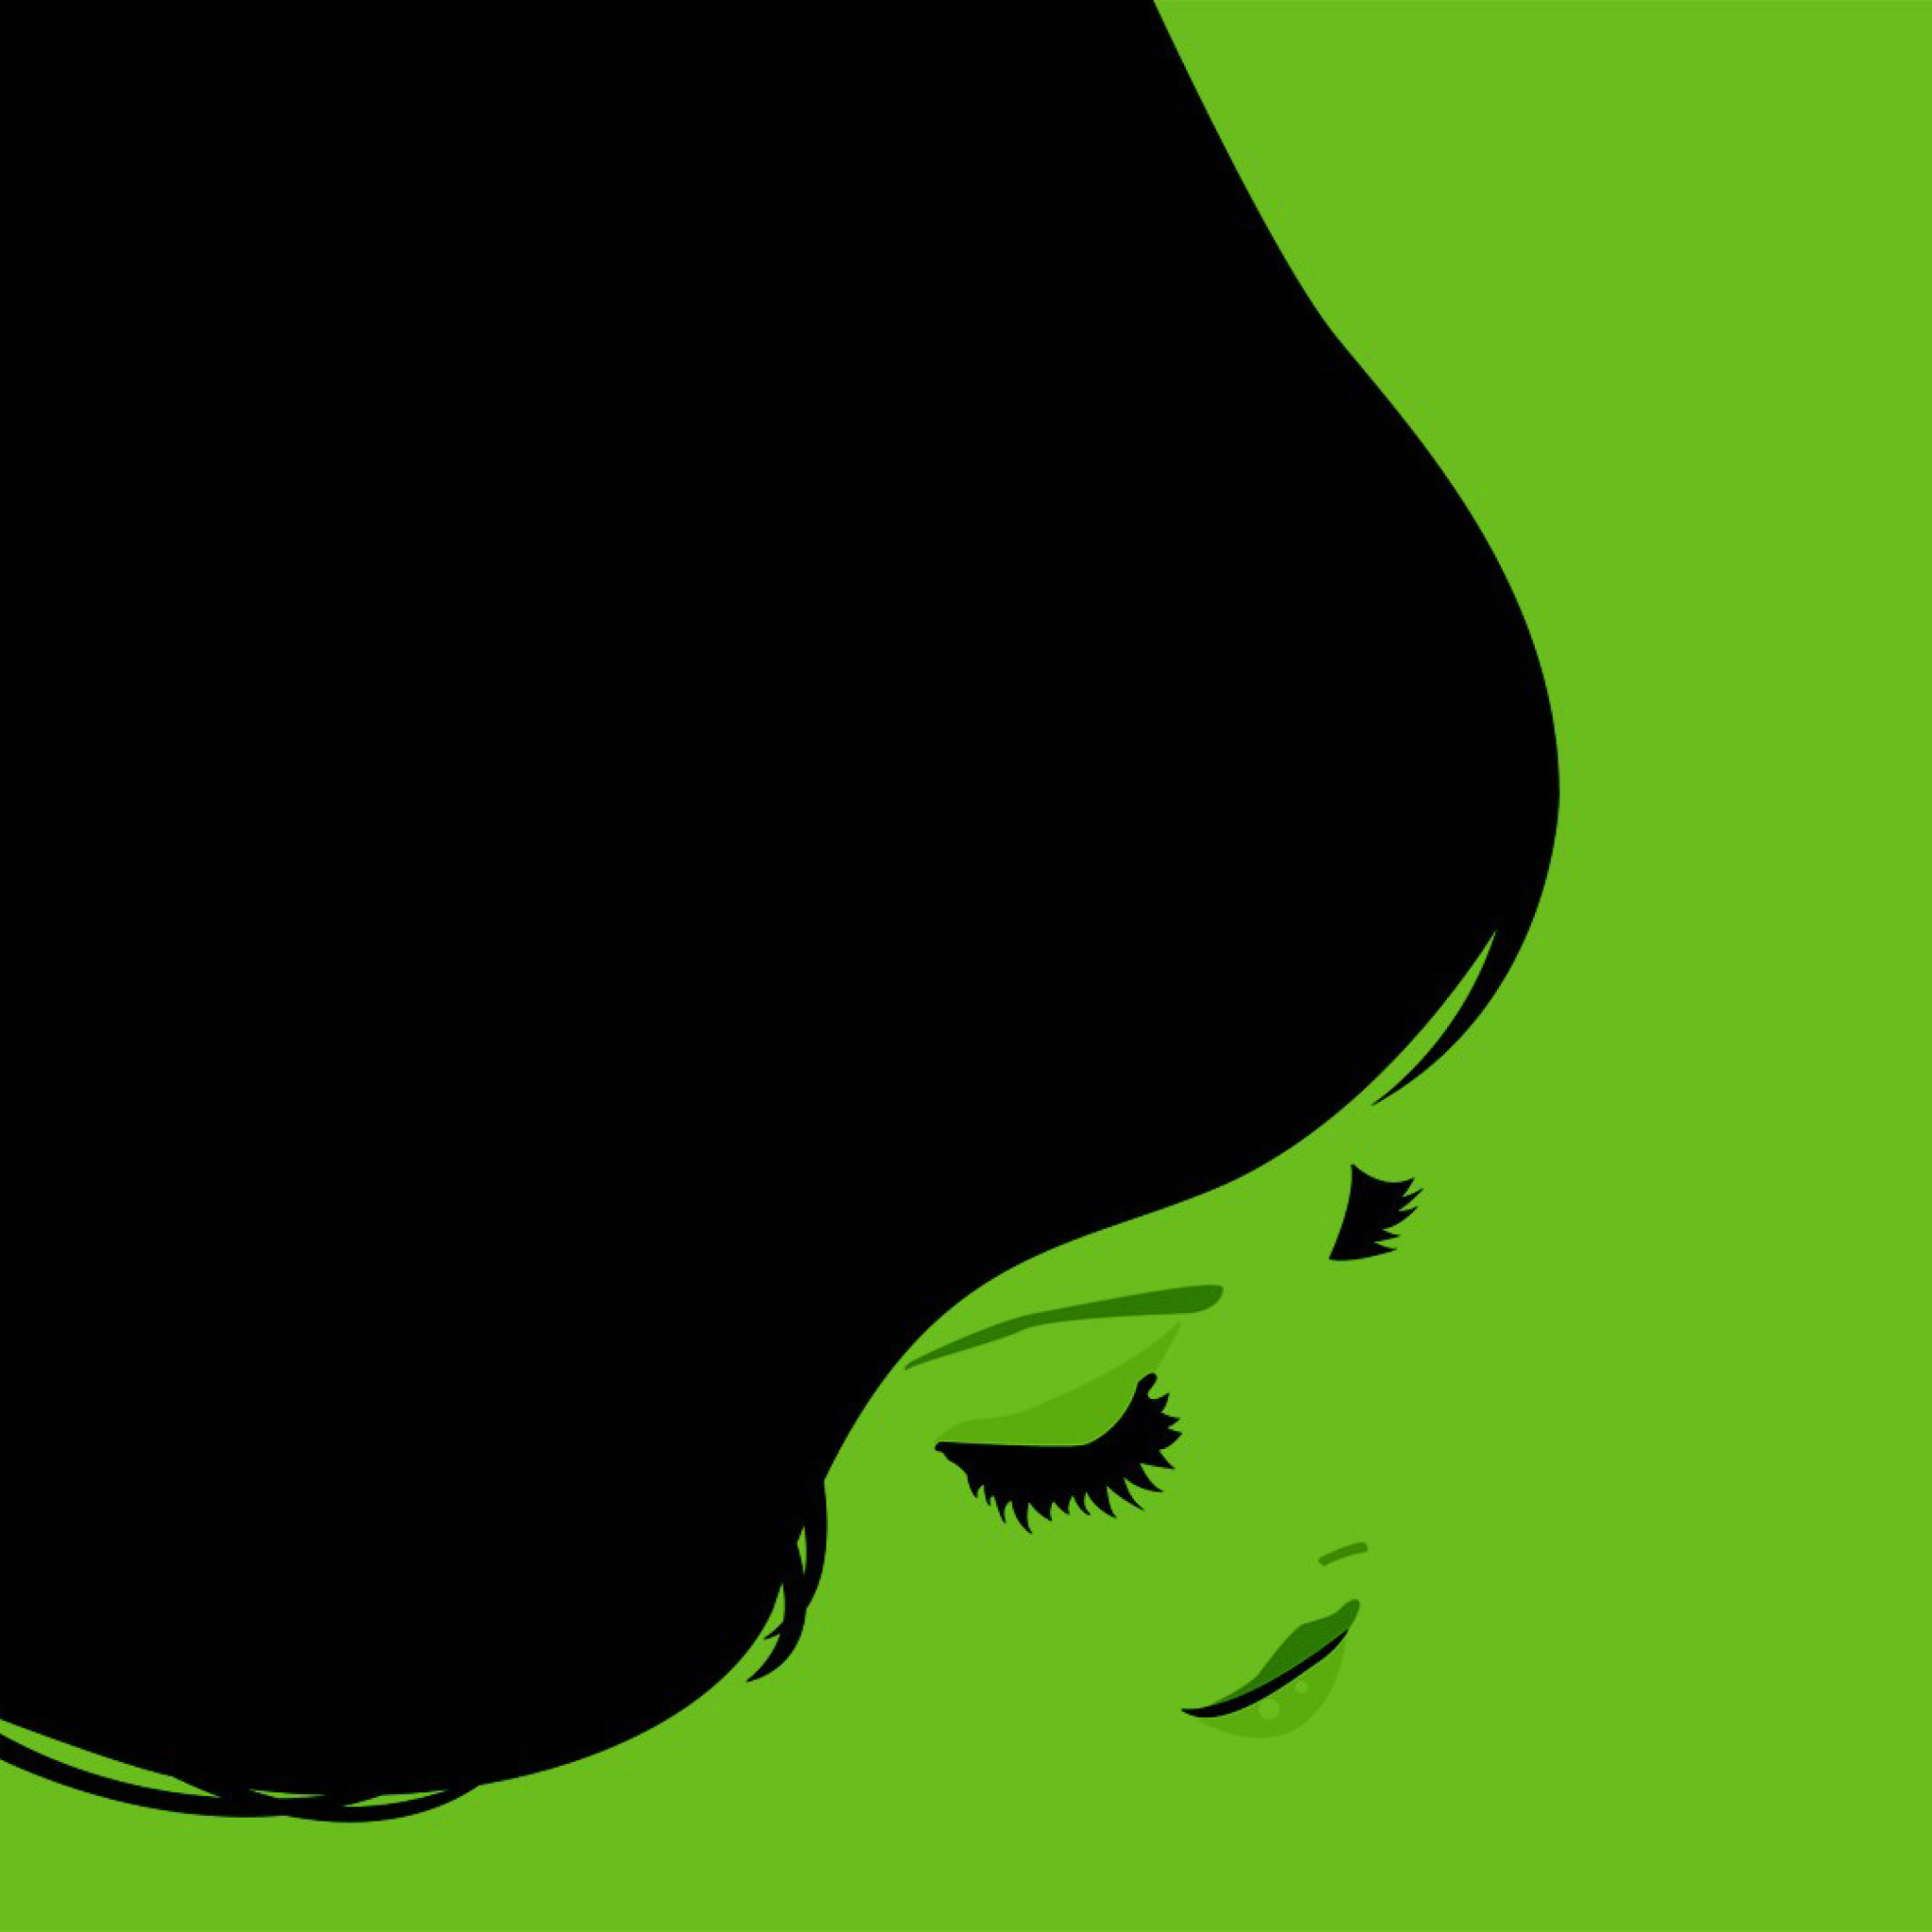 Das Girl's Face On Green Background Wallpaper 2048x2048